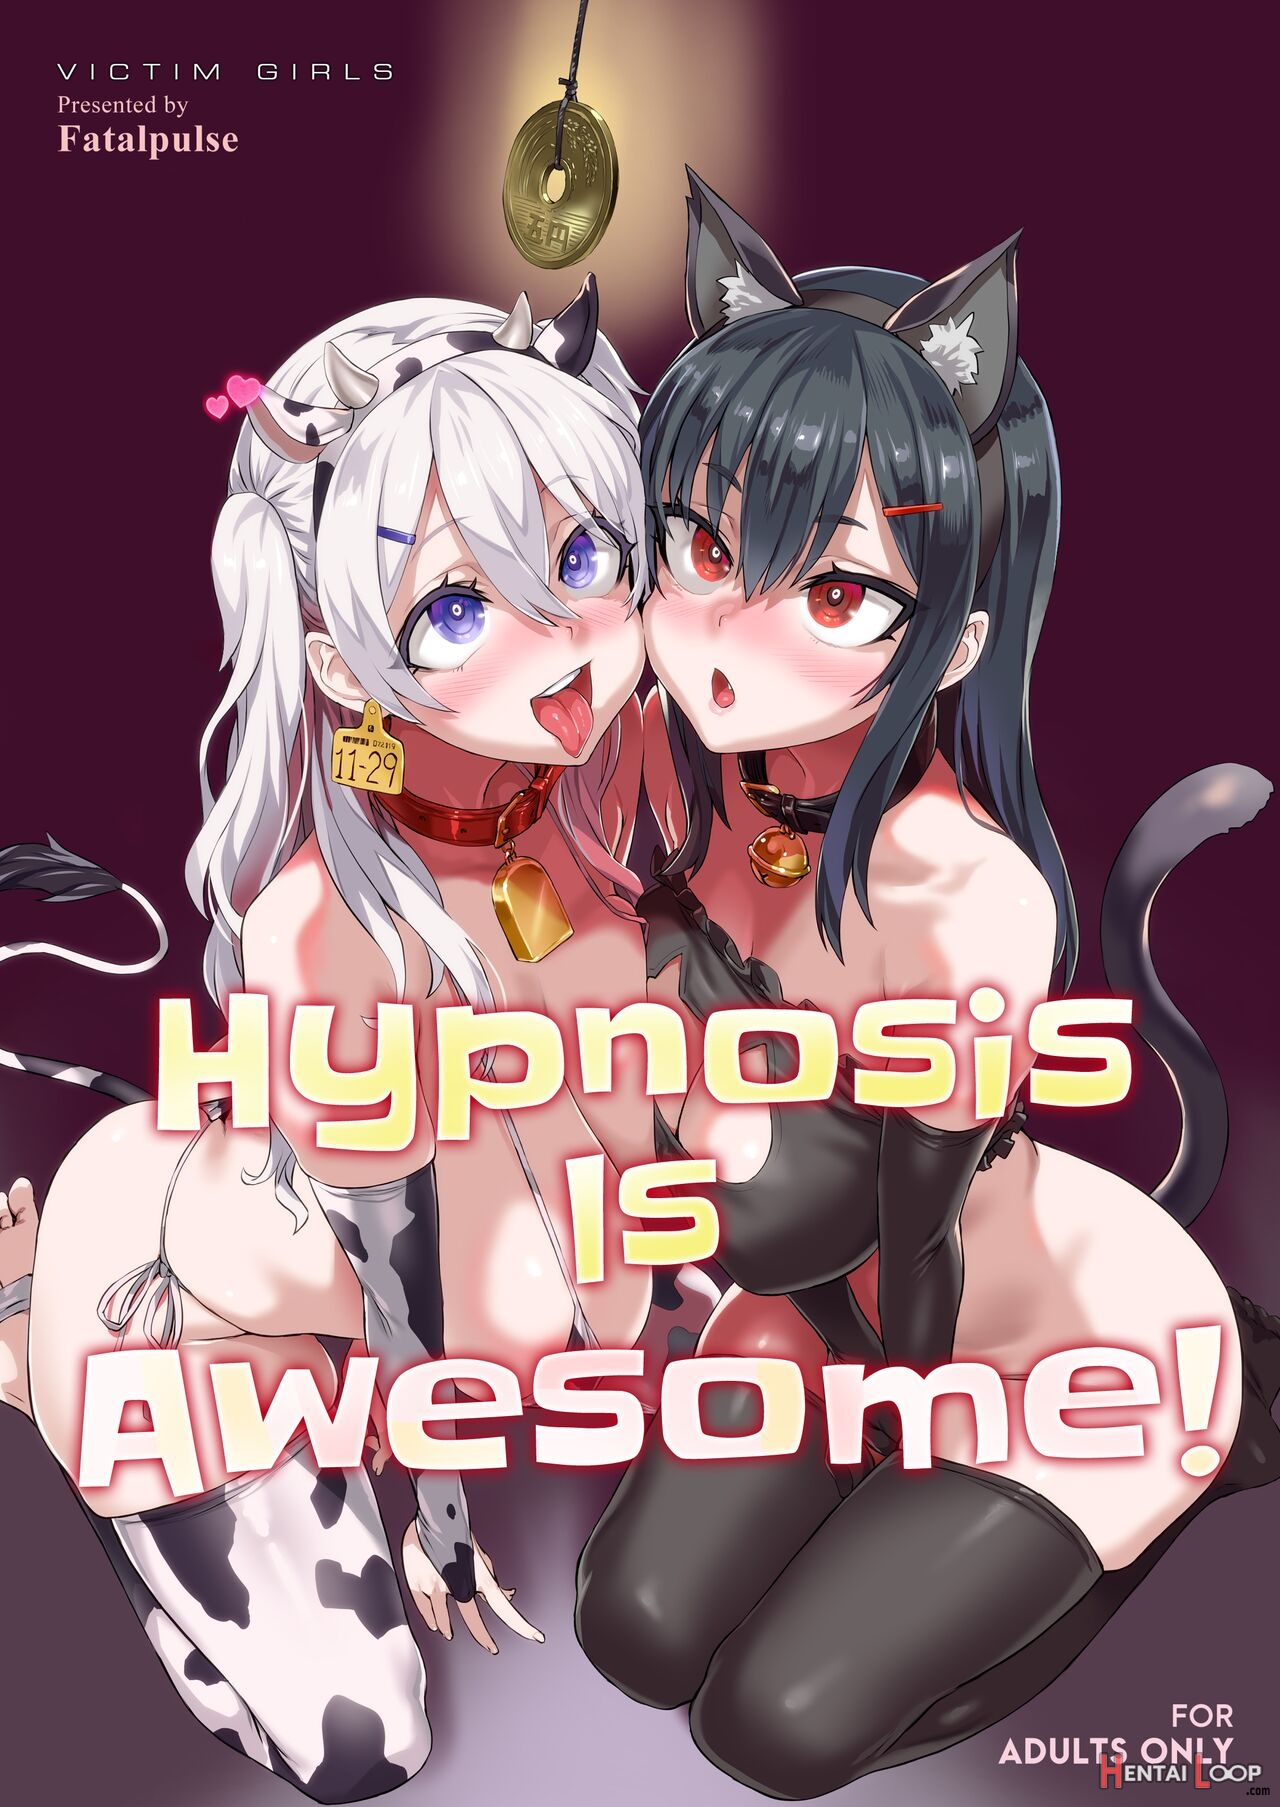 Hypnosis hentia